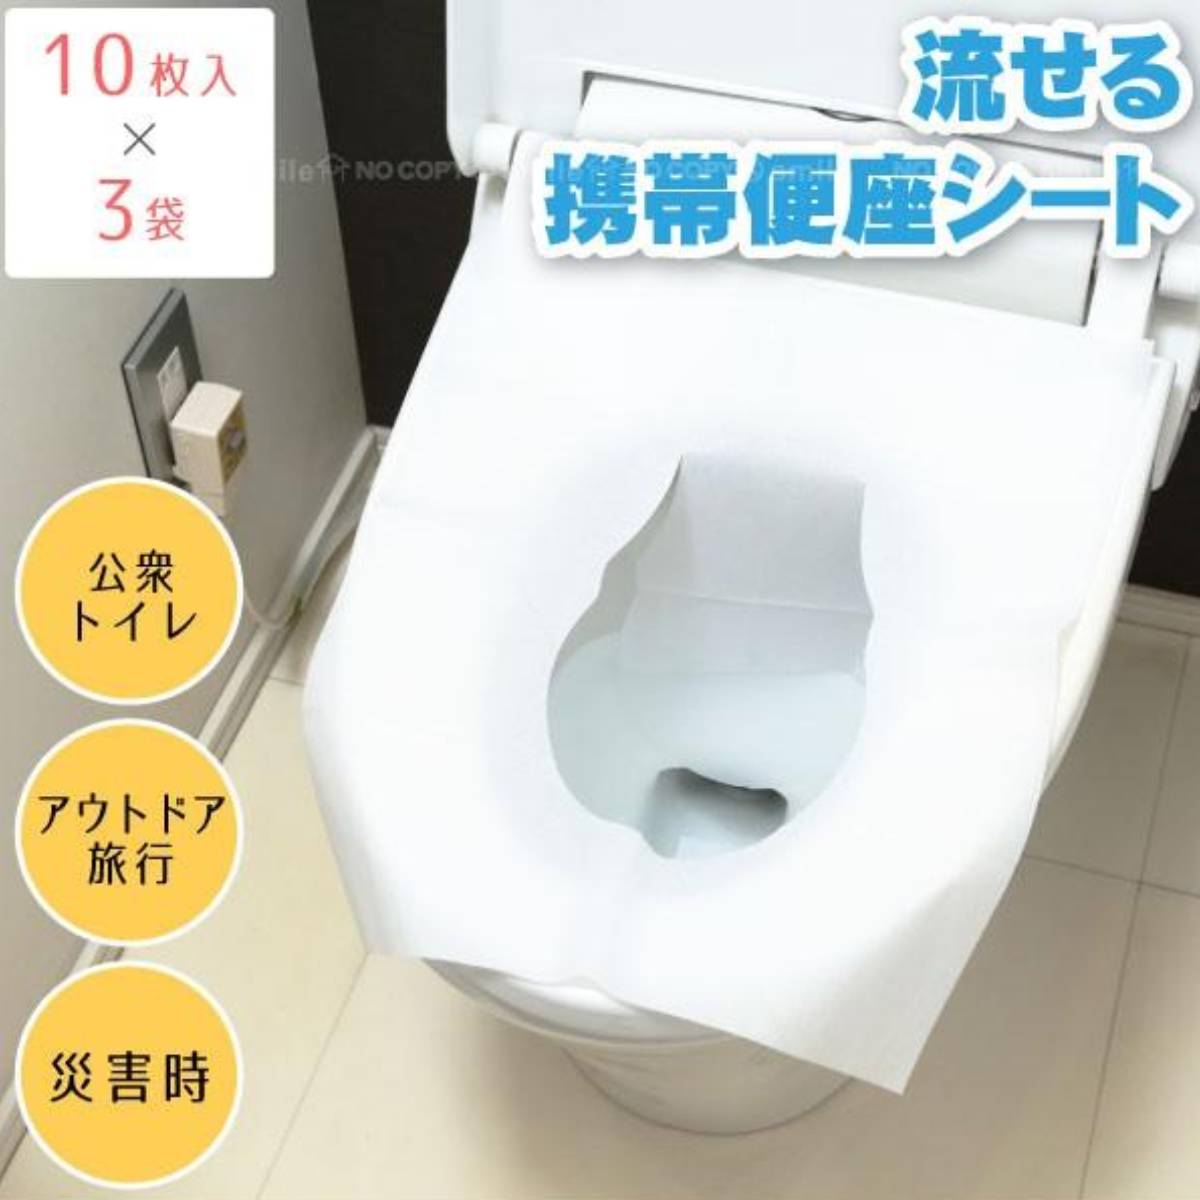 Toilet Seat Cover - Japan Q10x3